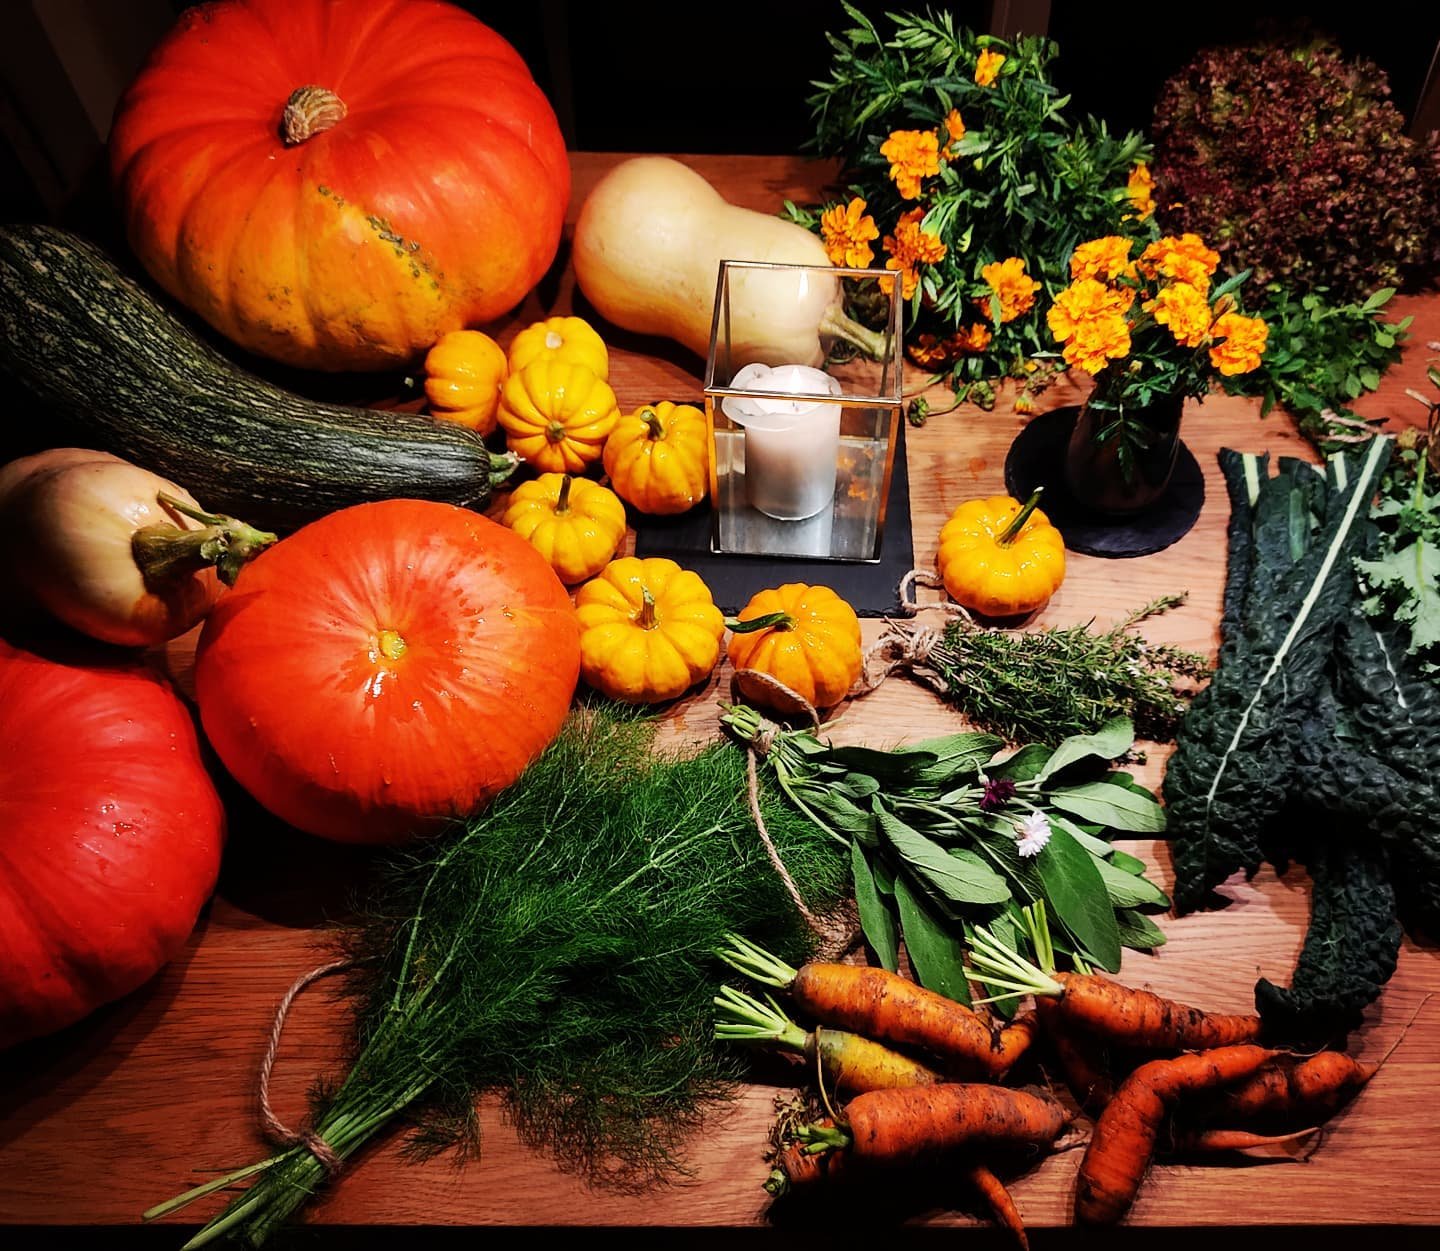 Happy Autumn Equinox everyone!

We are celebrating with this wonderful harvest table

#harvest #autumnequinox #vegetablegardening #permaculturegarden  #growyourown